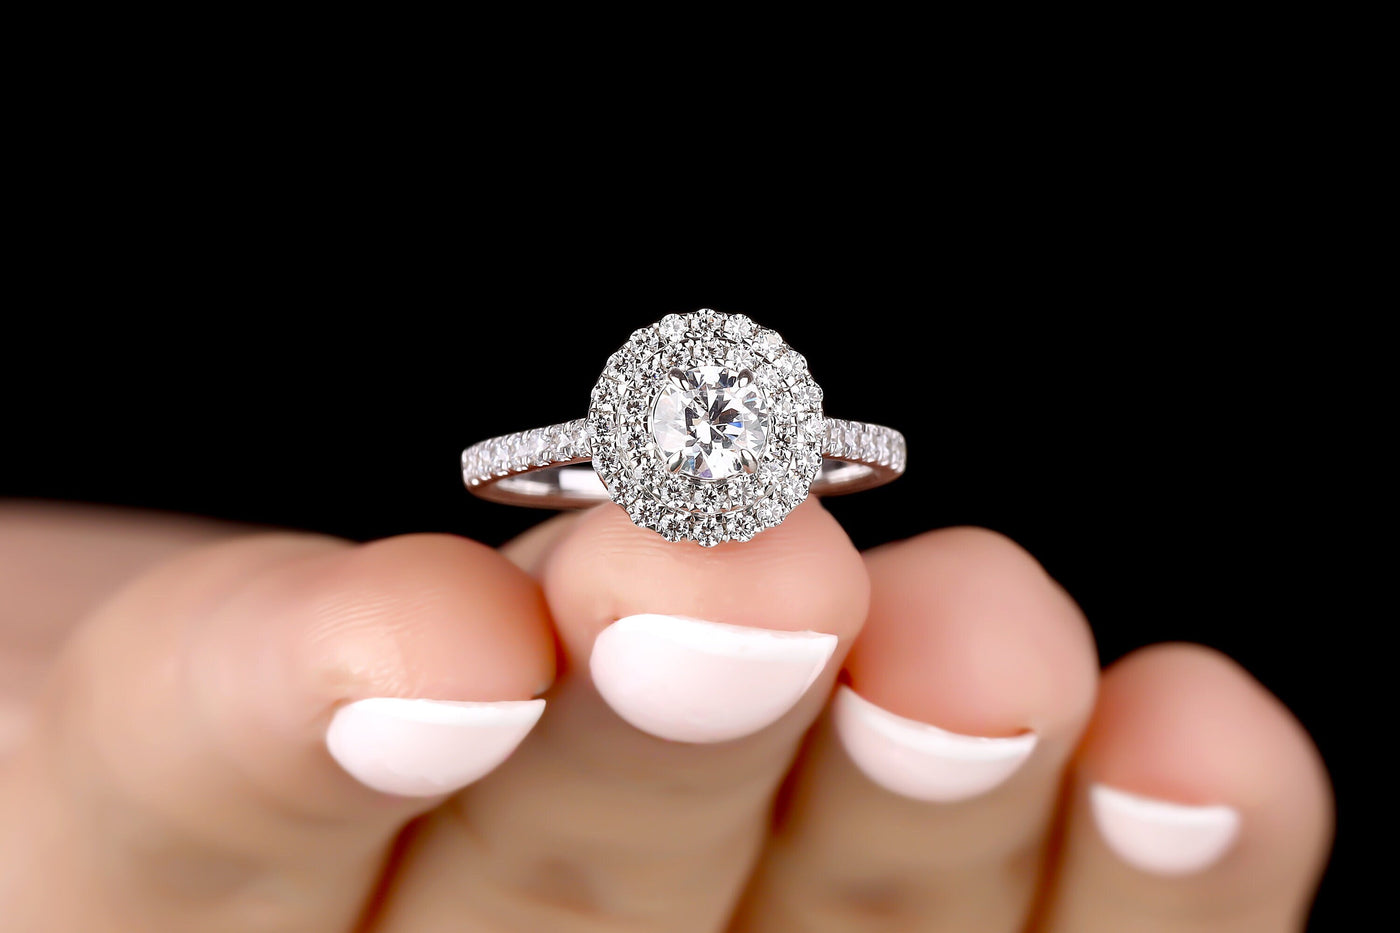 Round Cut Moissanite Engagement Ring 10K/14K White Gold Ring Double Halo Pave Setting Moissanite Ring Bridal Wedding Ring Gift For Women's